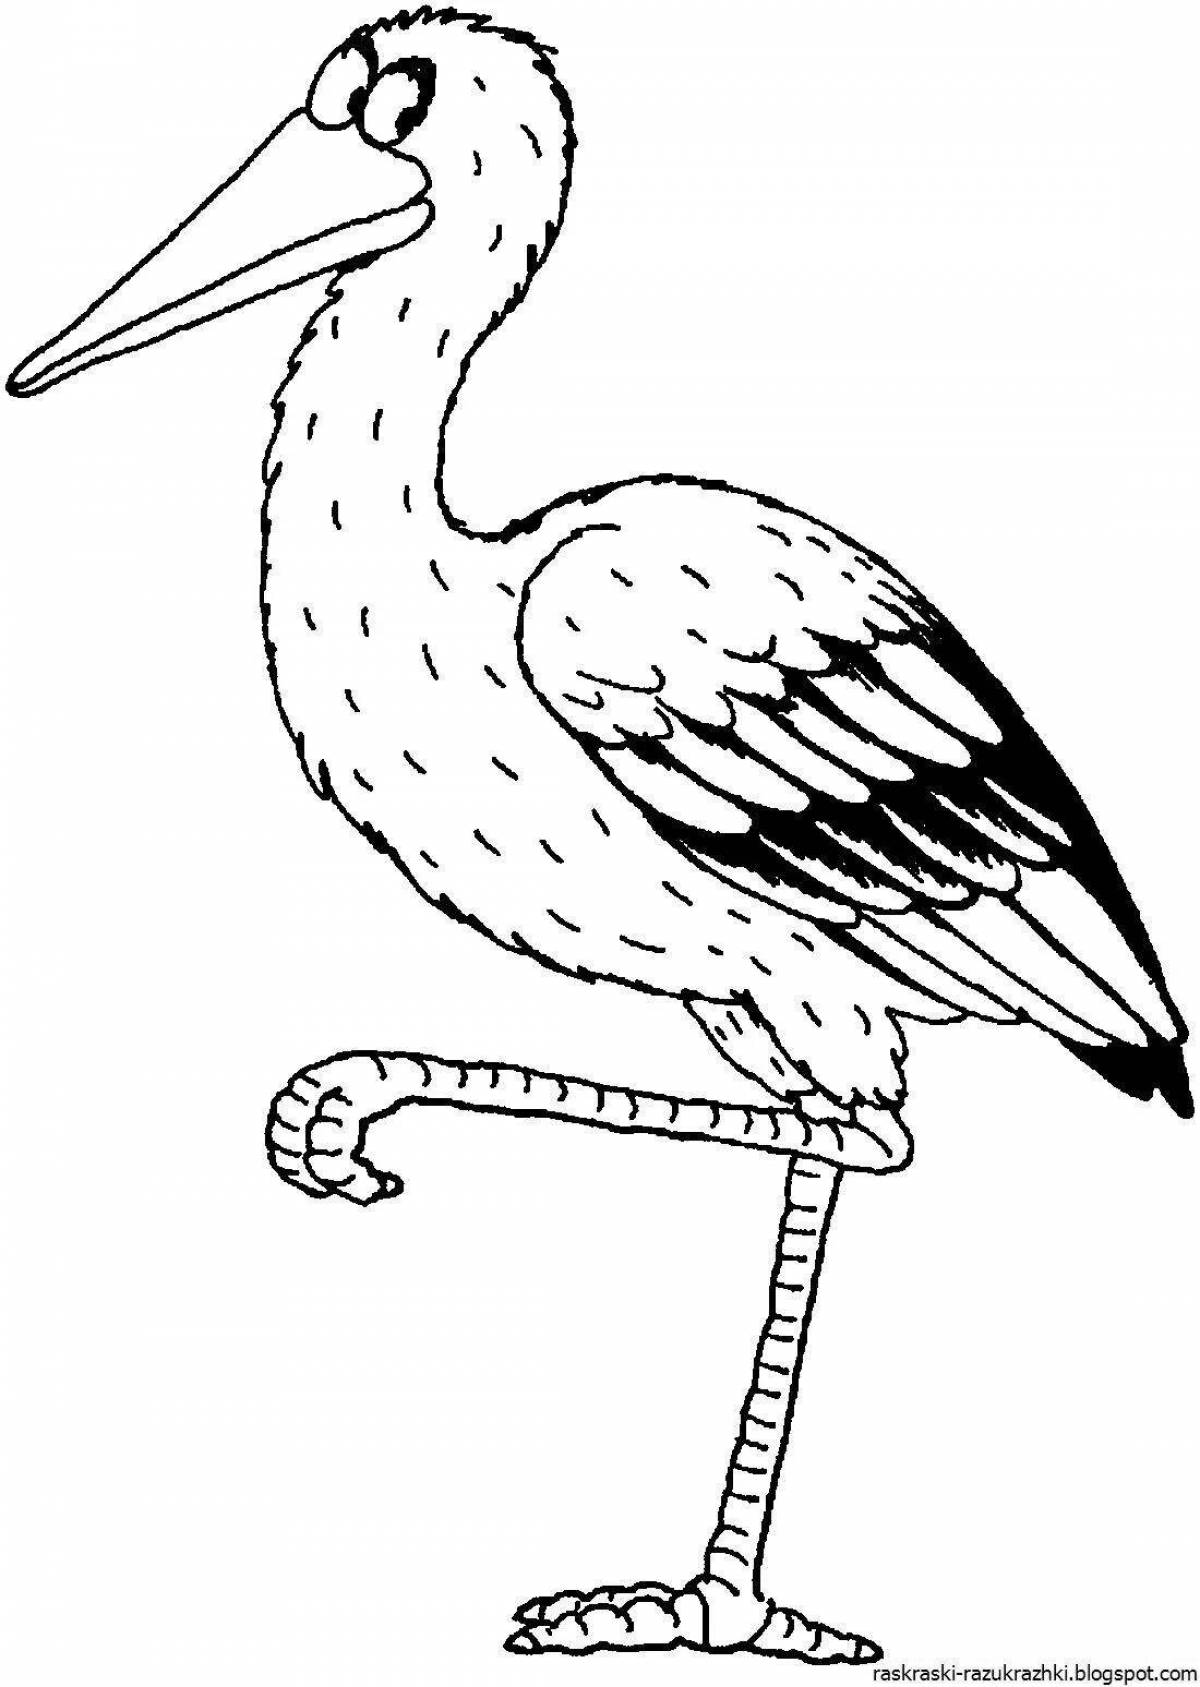 Playful black stork coloring page for kids